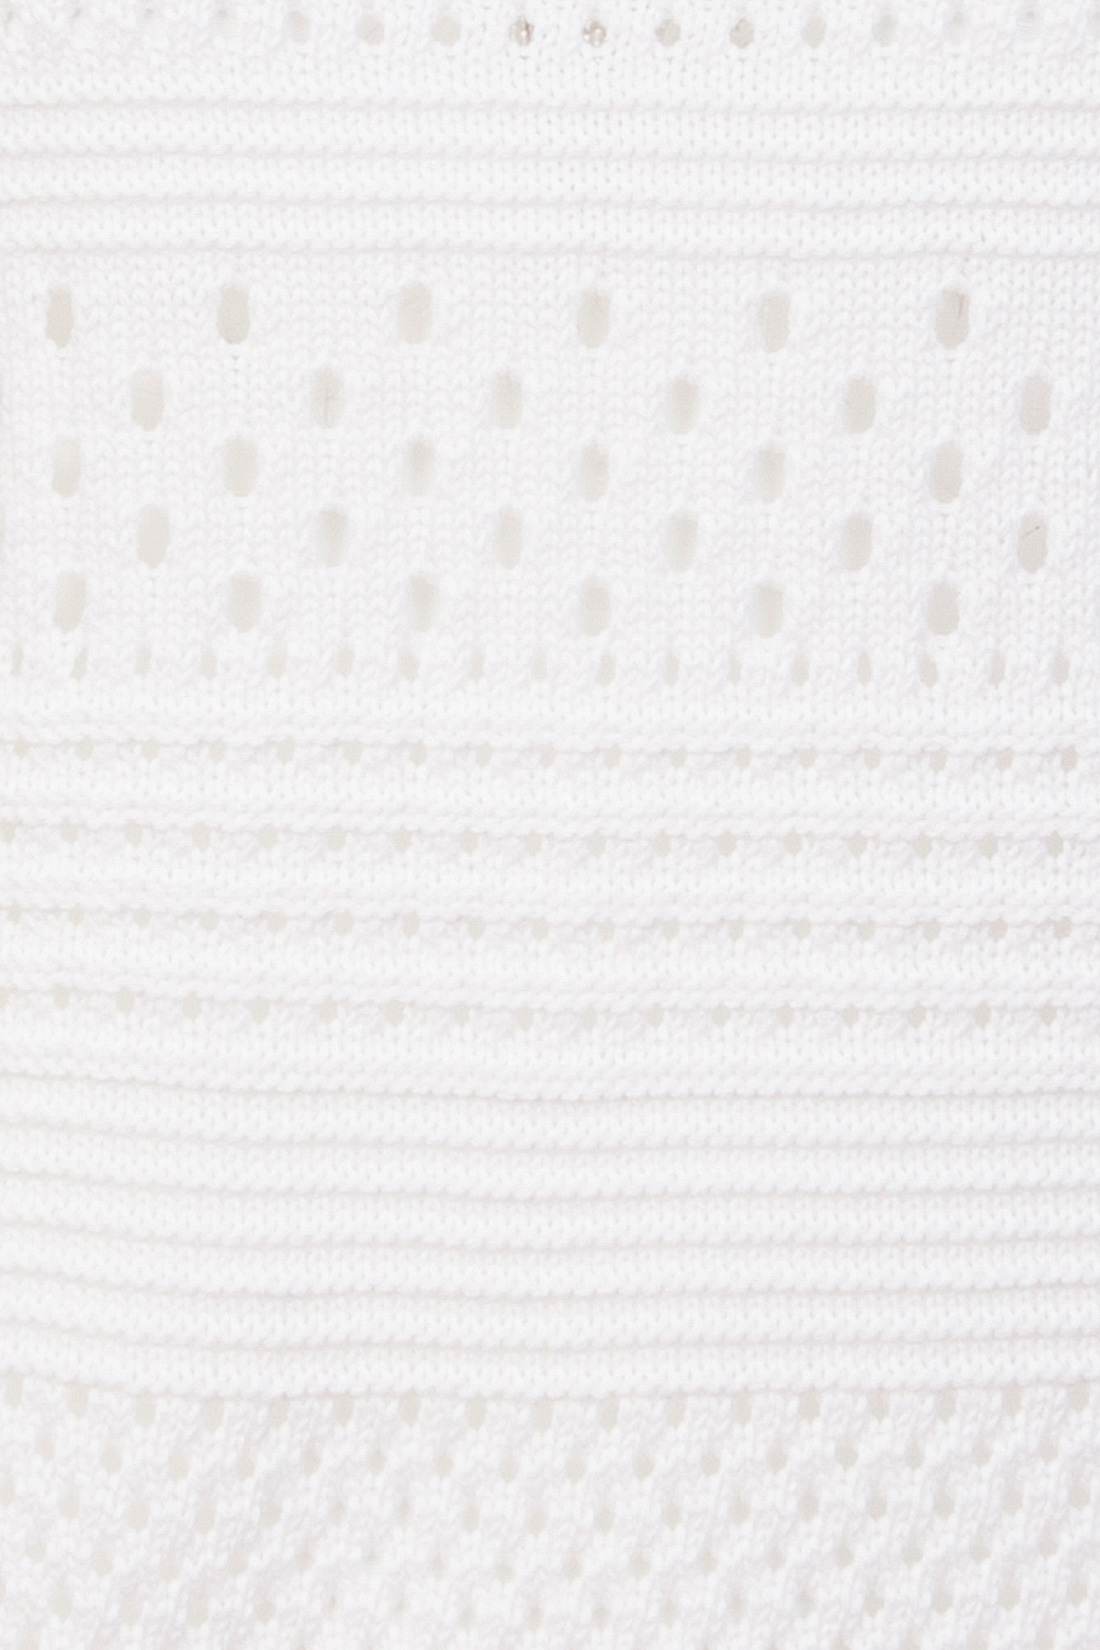 Джемпер с ажурным узором (арт. baon B137028), размер XL, цвет белый Джемпер с ажурным узором (арт. baon B137028) - фото 3